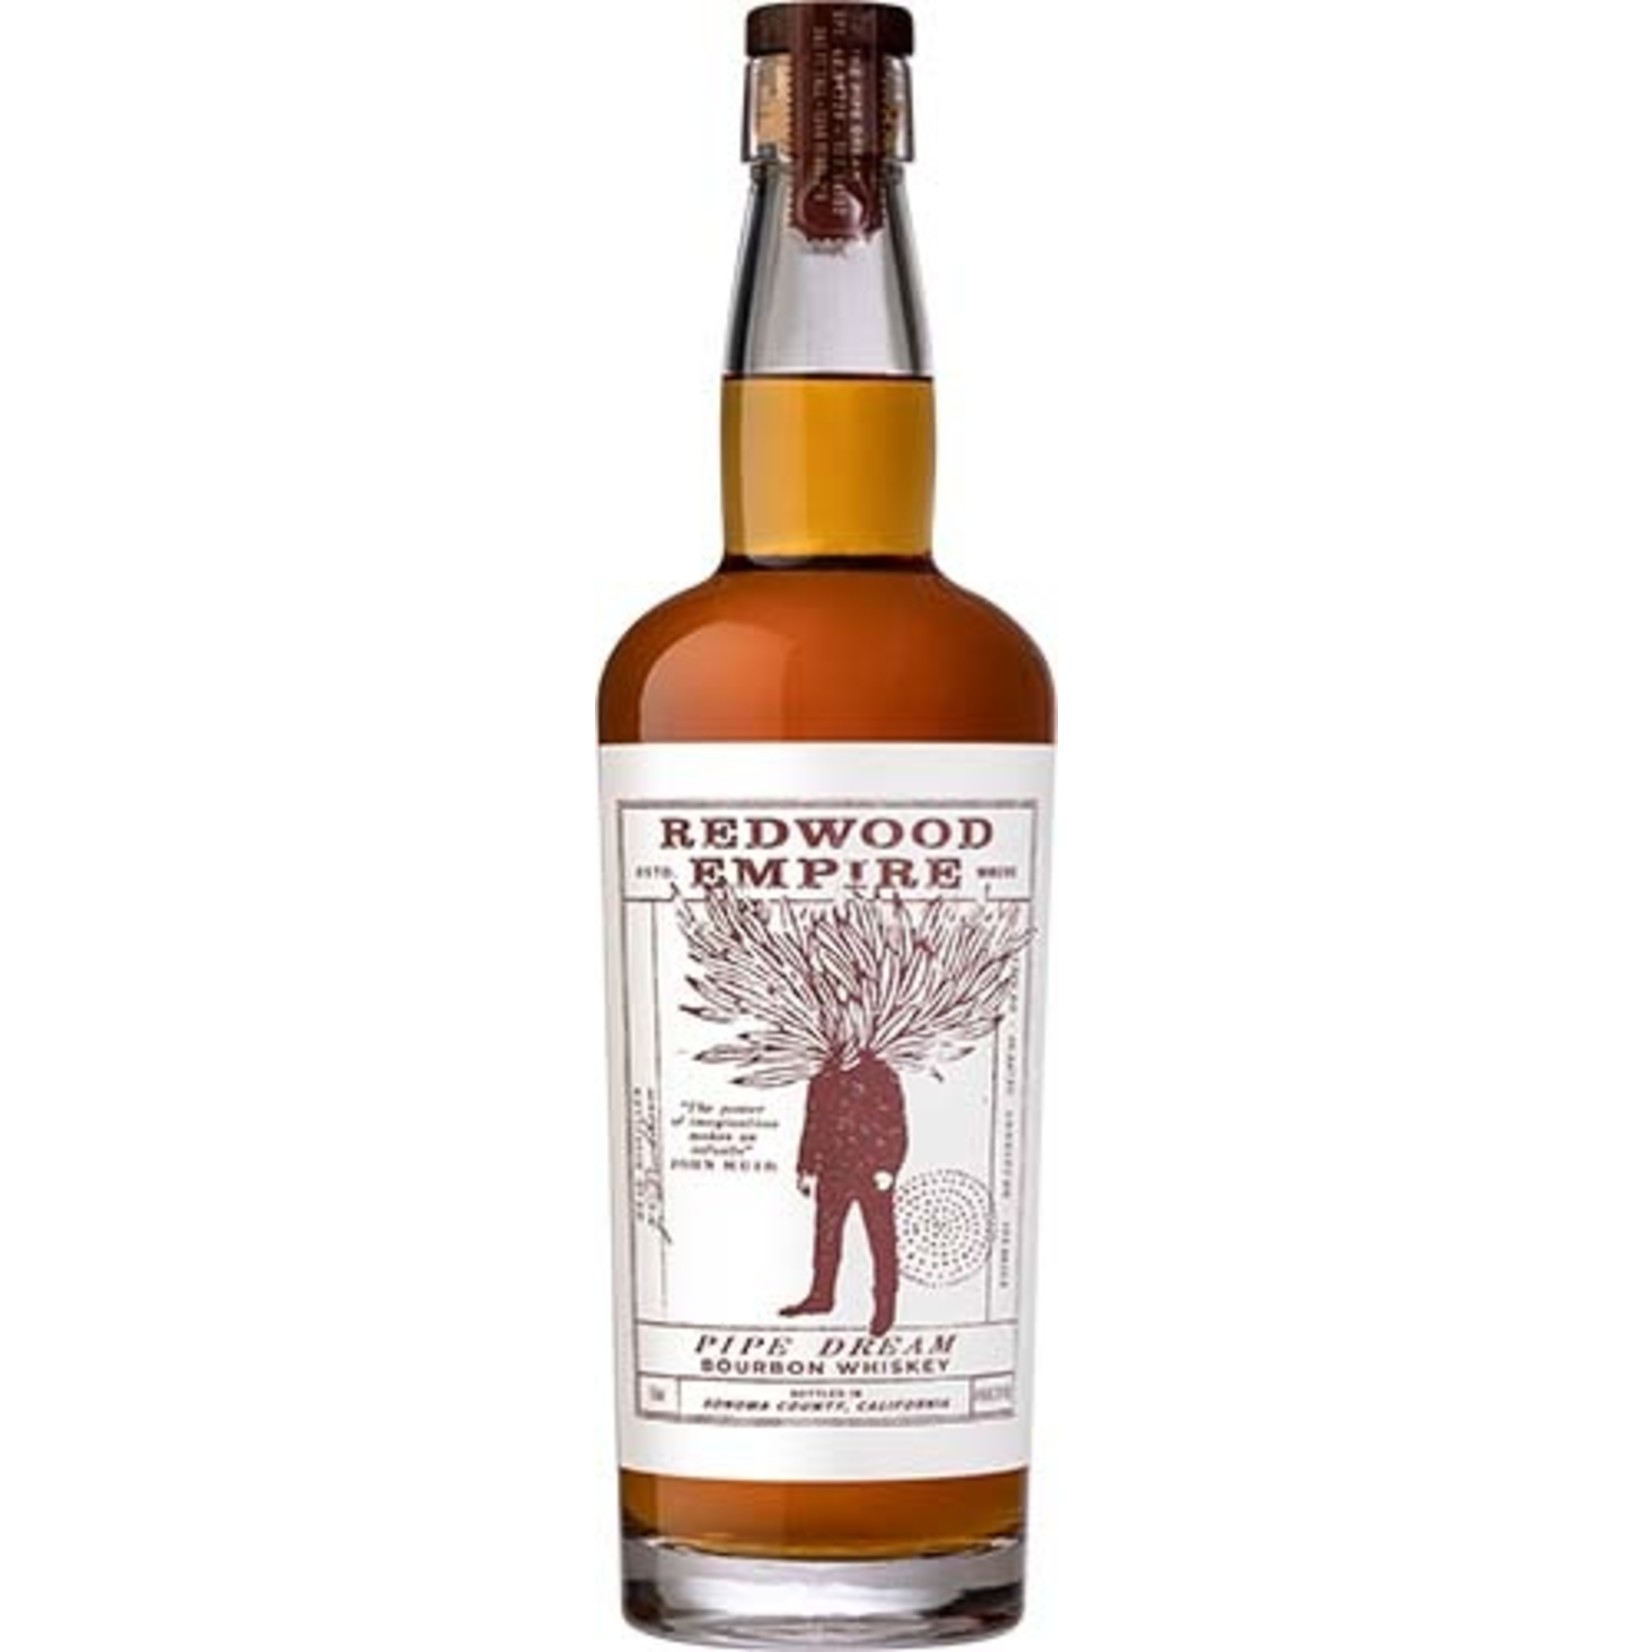 Redwood Empire Redwood Empire Pipe Dream (Bourbon Whiskey)